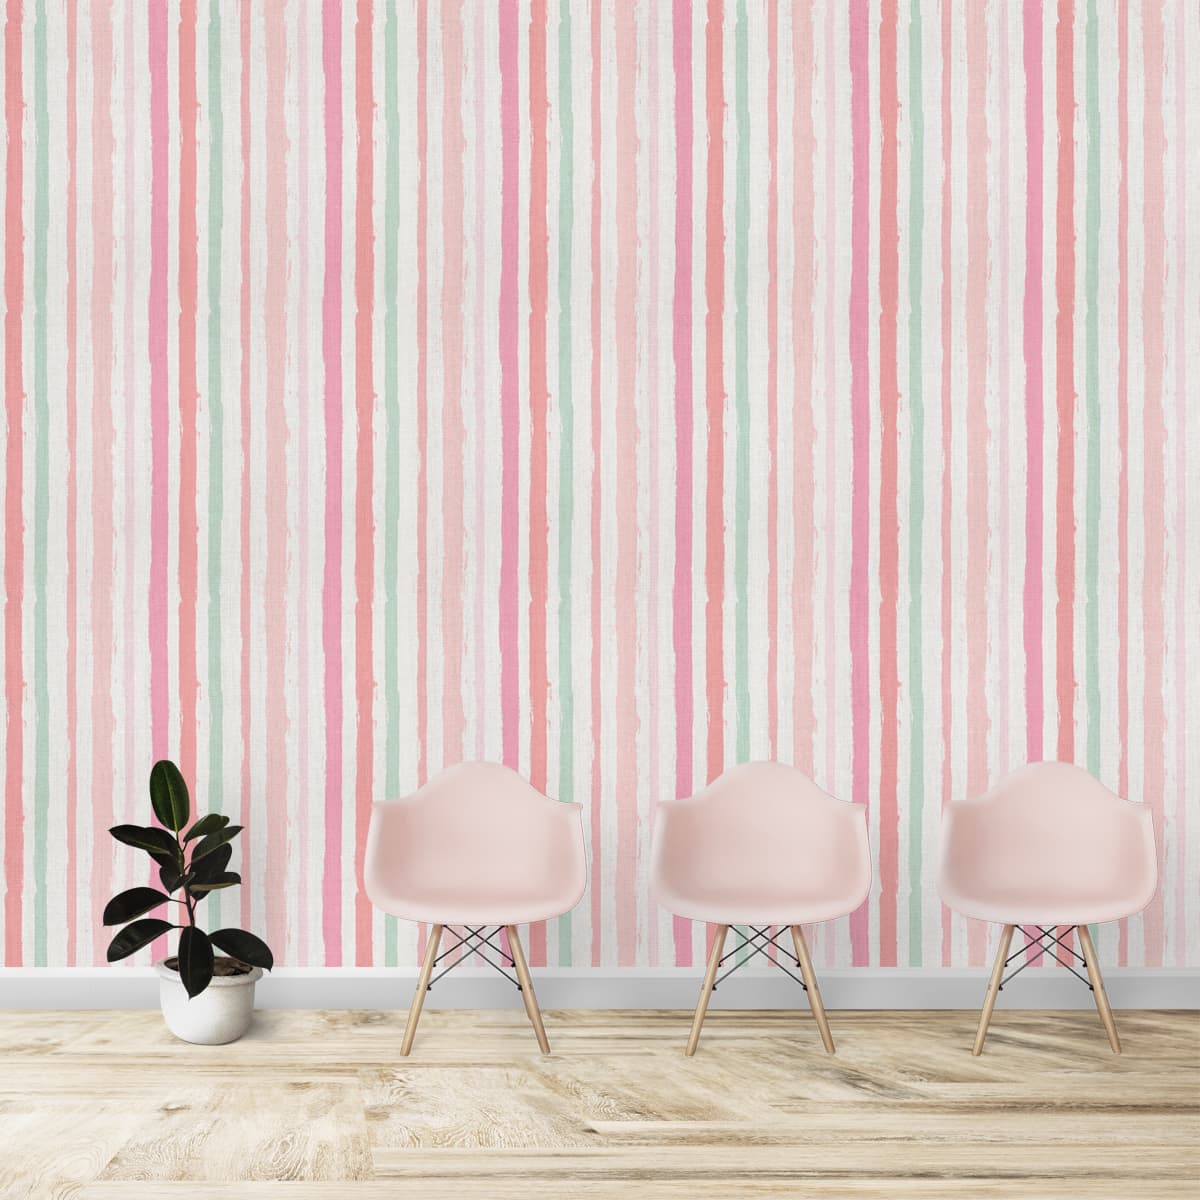 Pastel Irregular Striped Wallpaper, Pink and Green